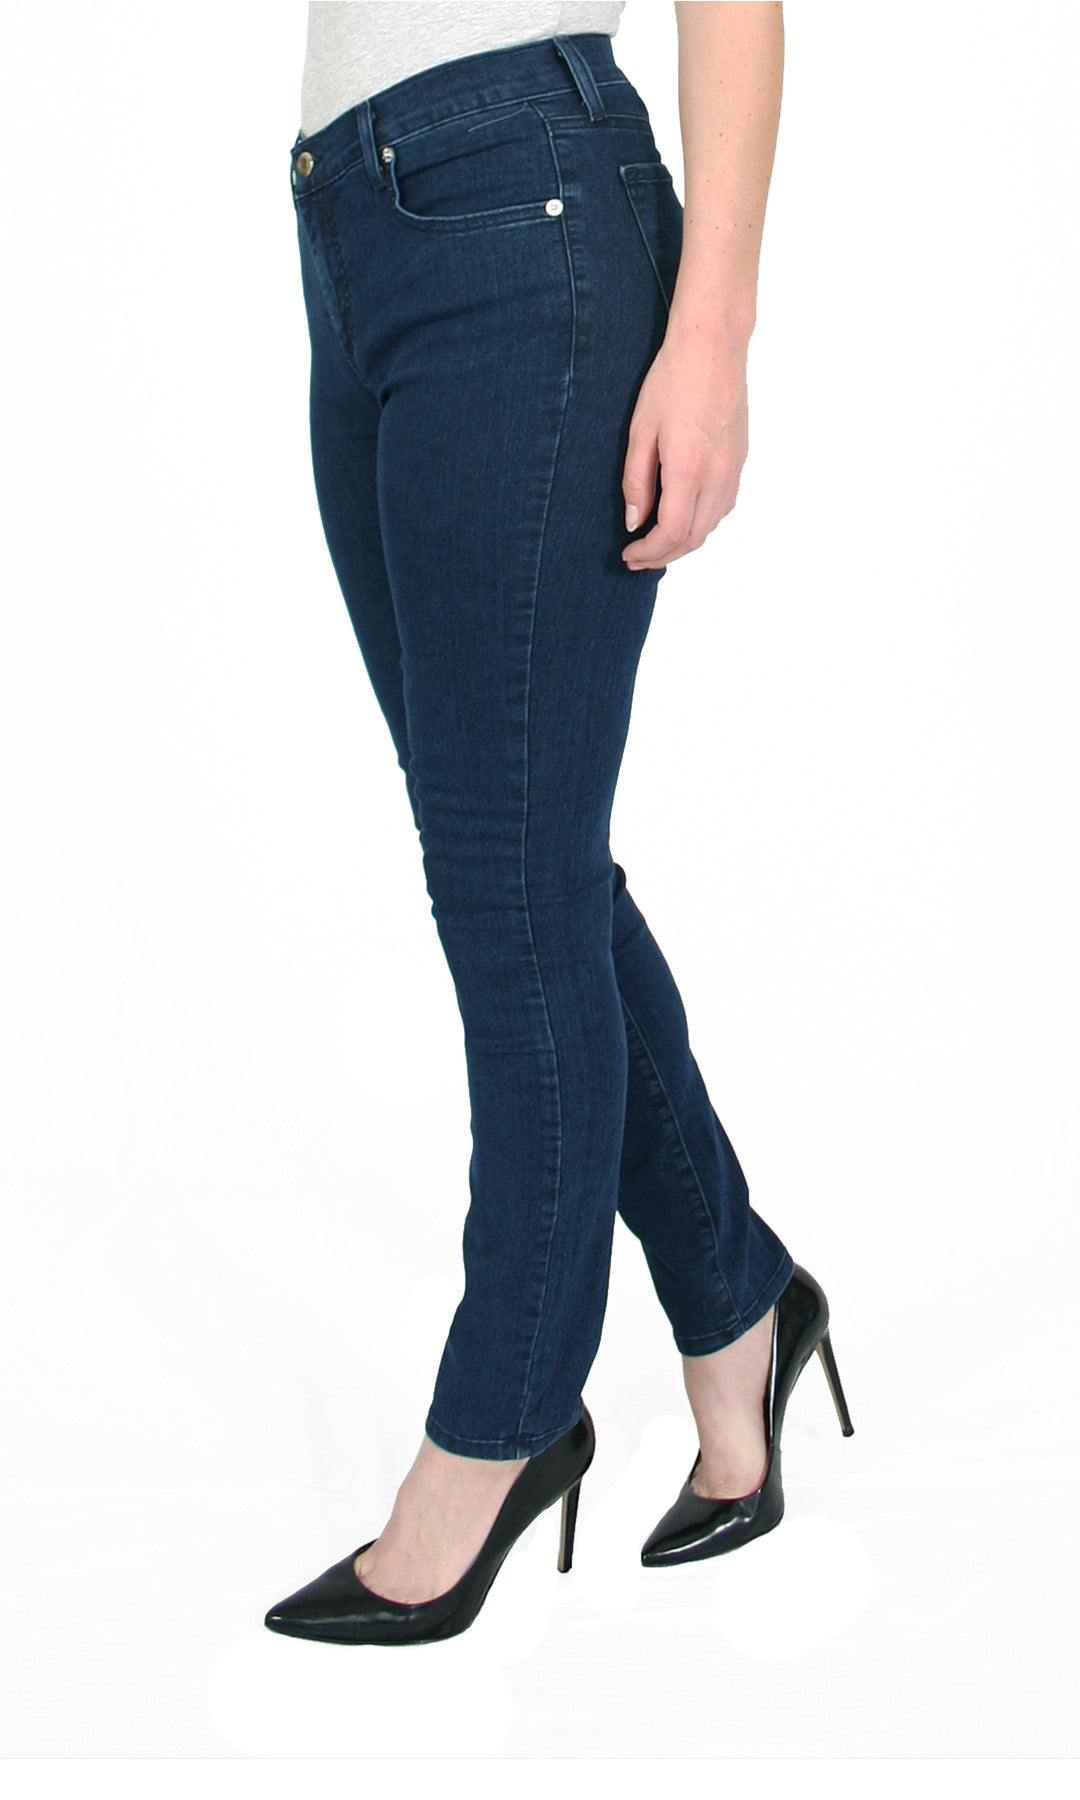 TrueSlim™ Black Leggings for Women – TrueSlim Jeans